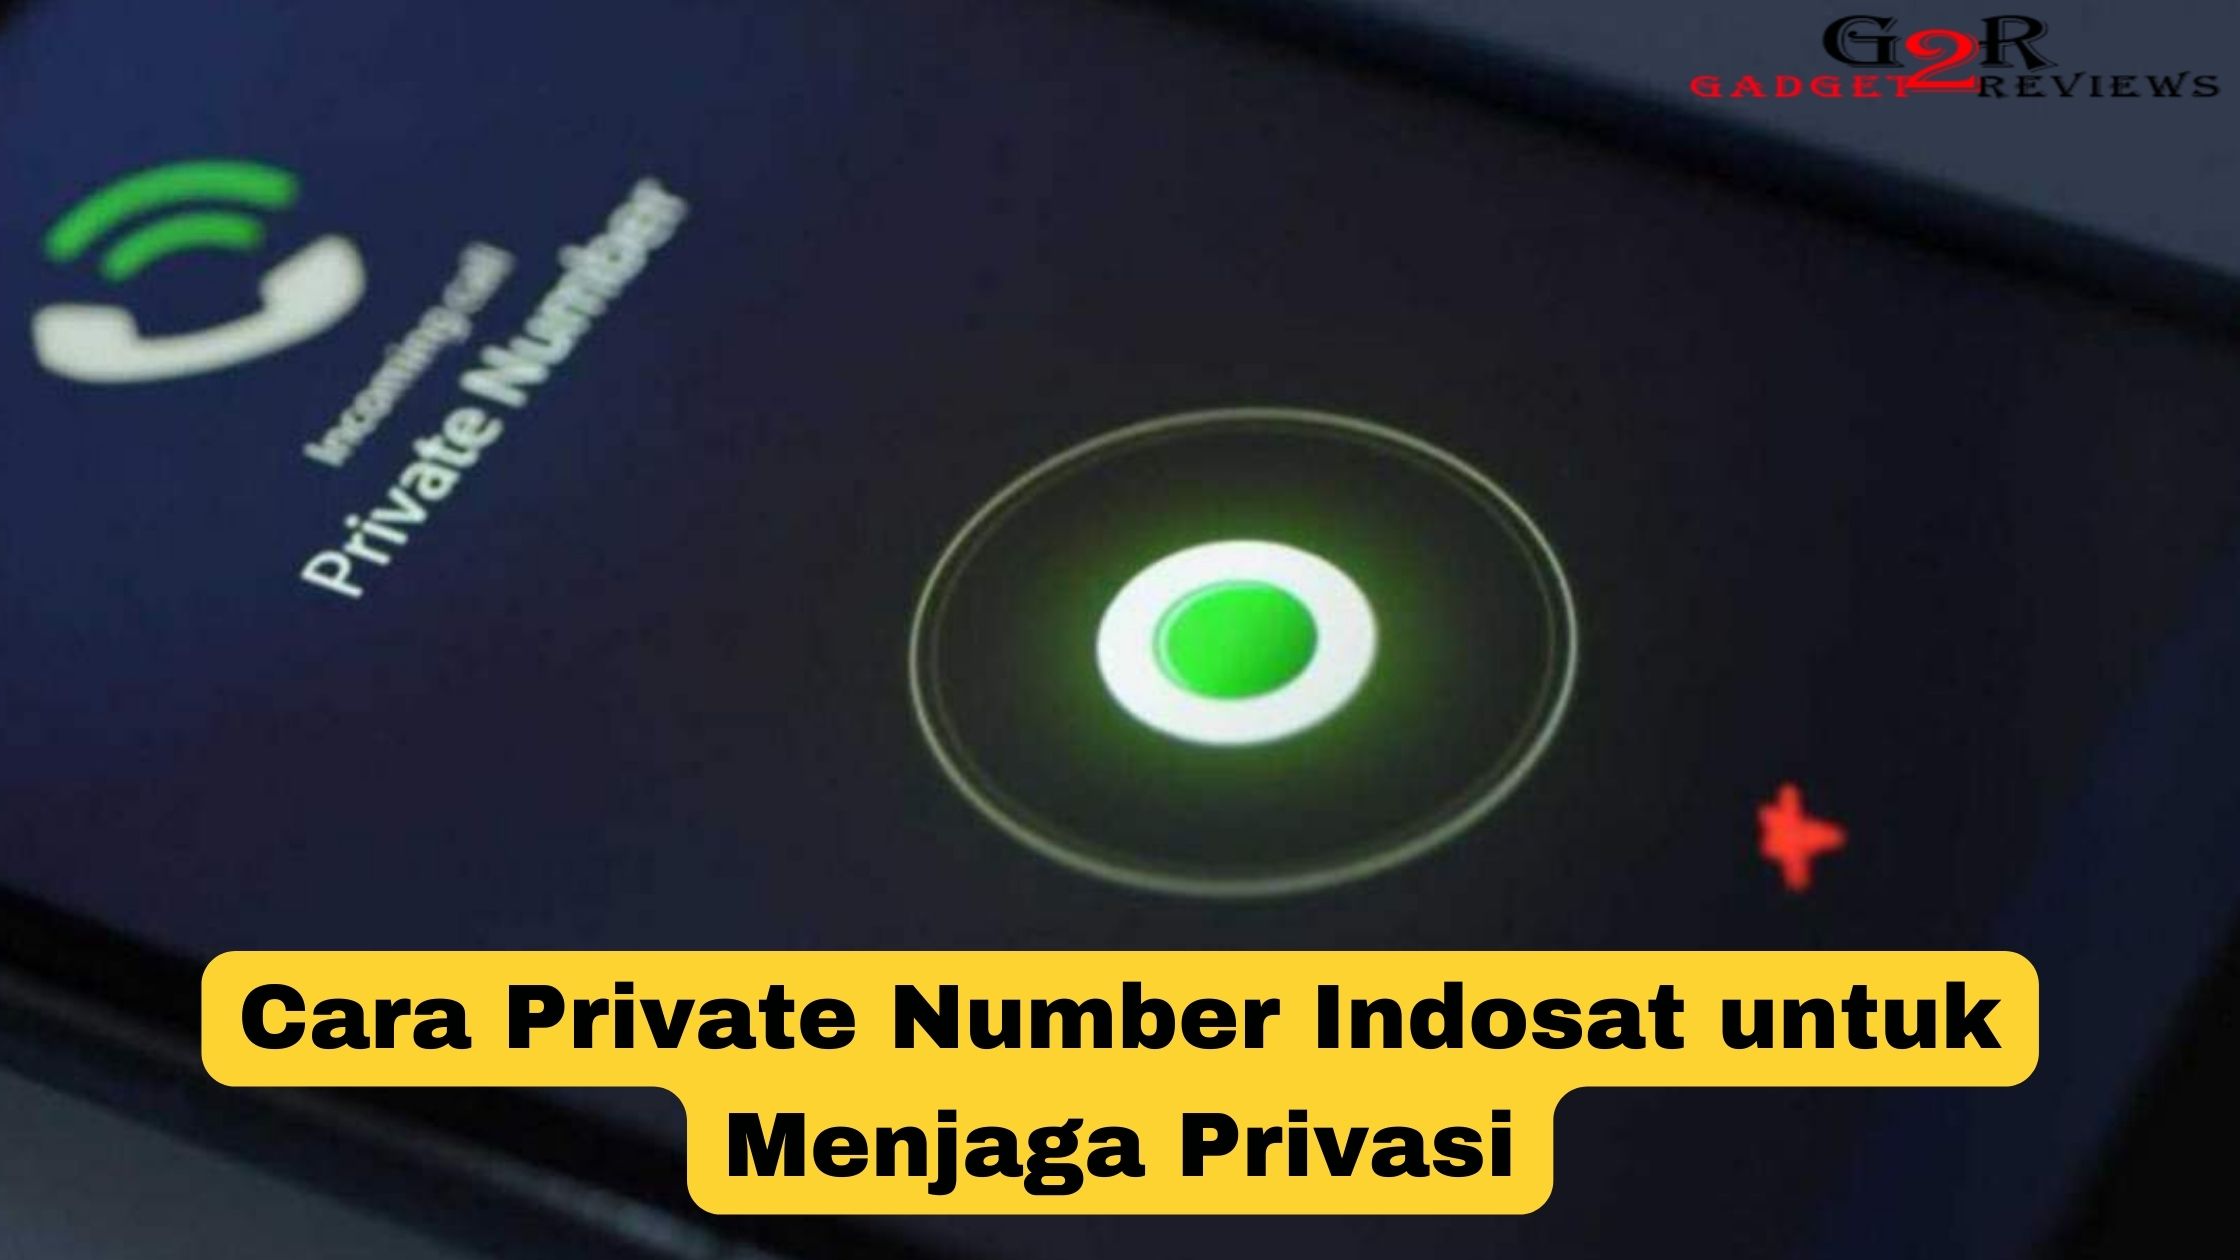 Cara Private Number Indosat